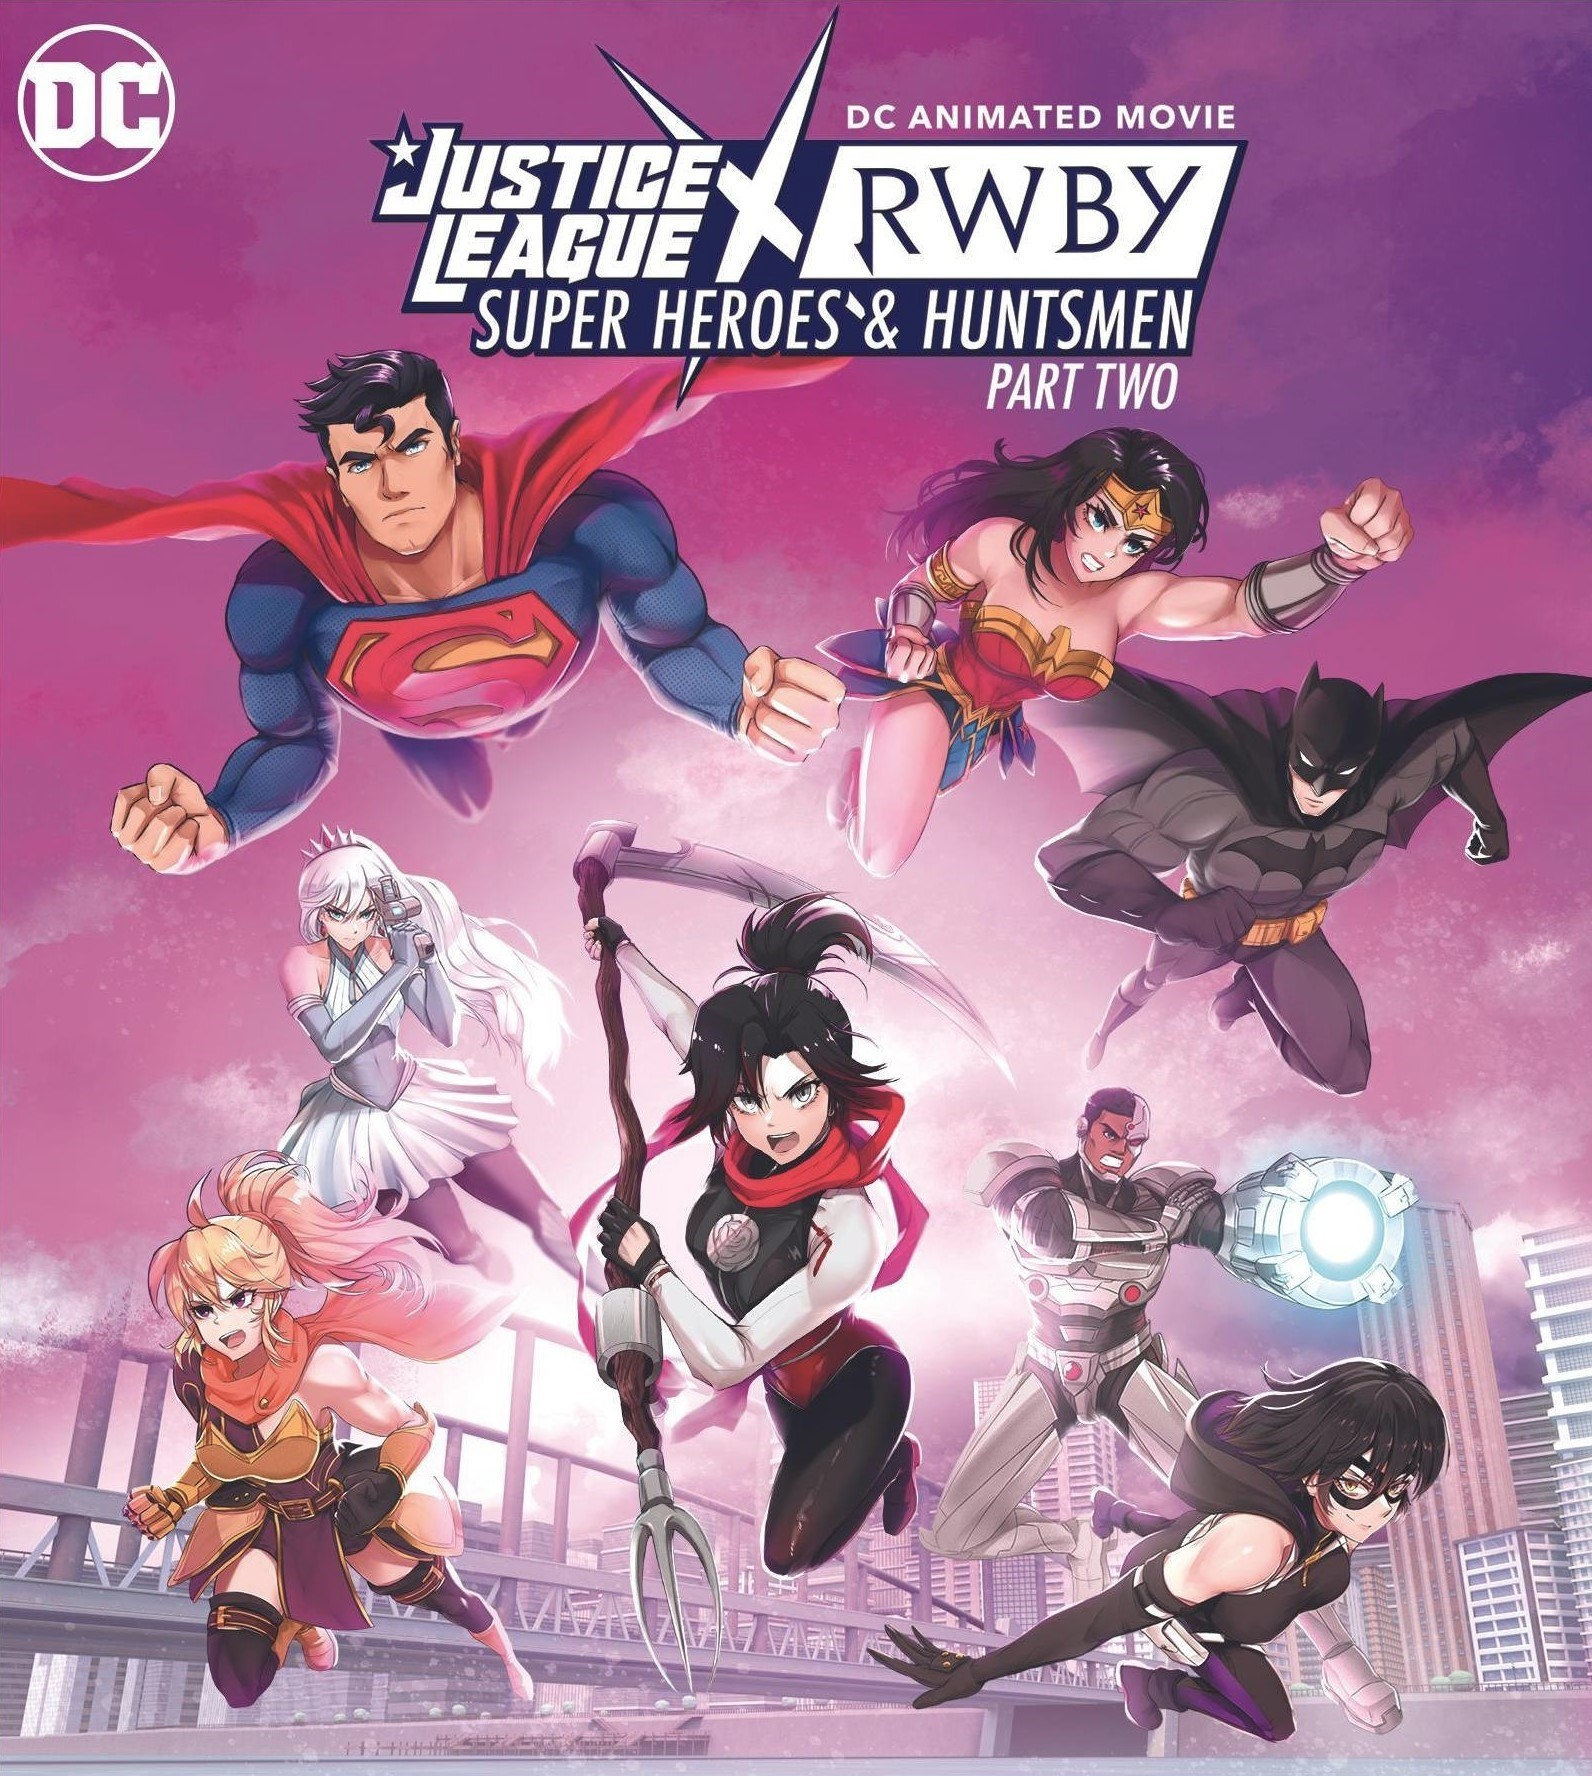 Justice League x RWBY Super Heroes and Huntsmen, Part Two RWBY Wiki Fandom